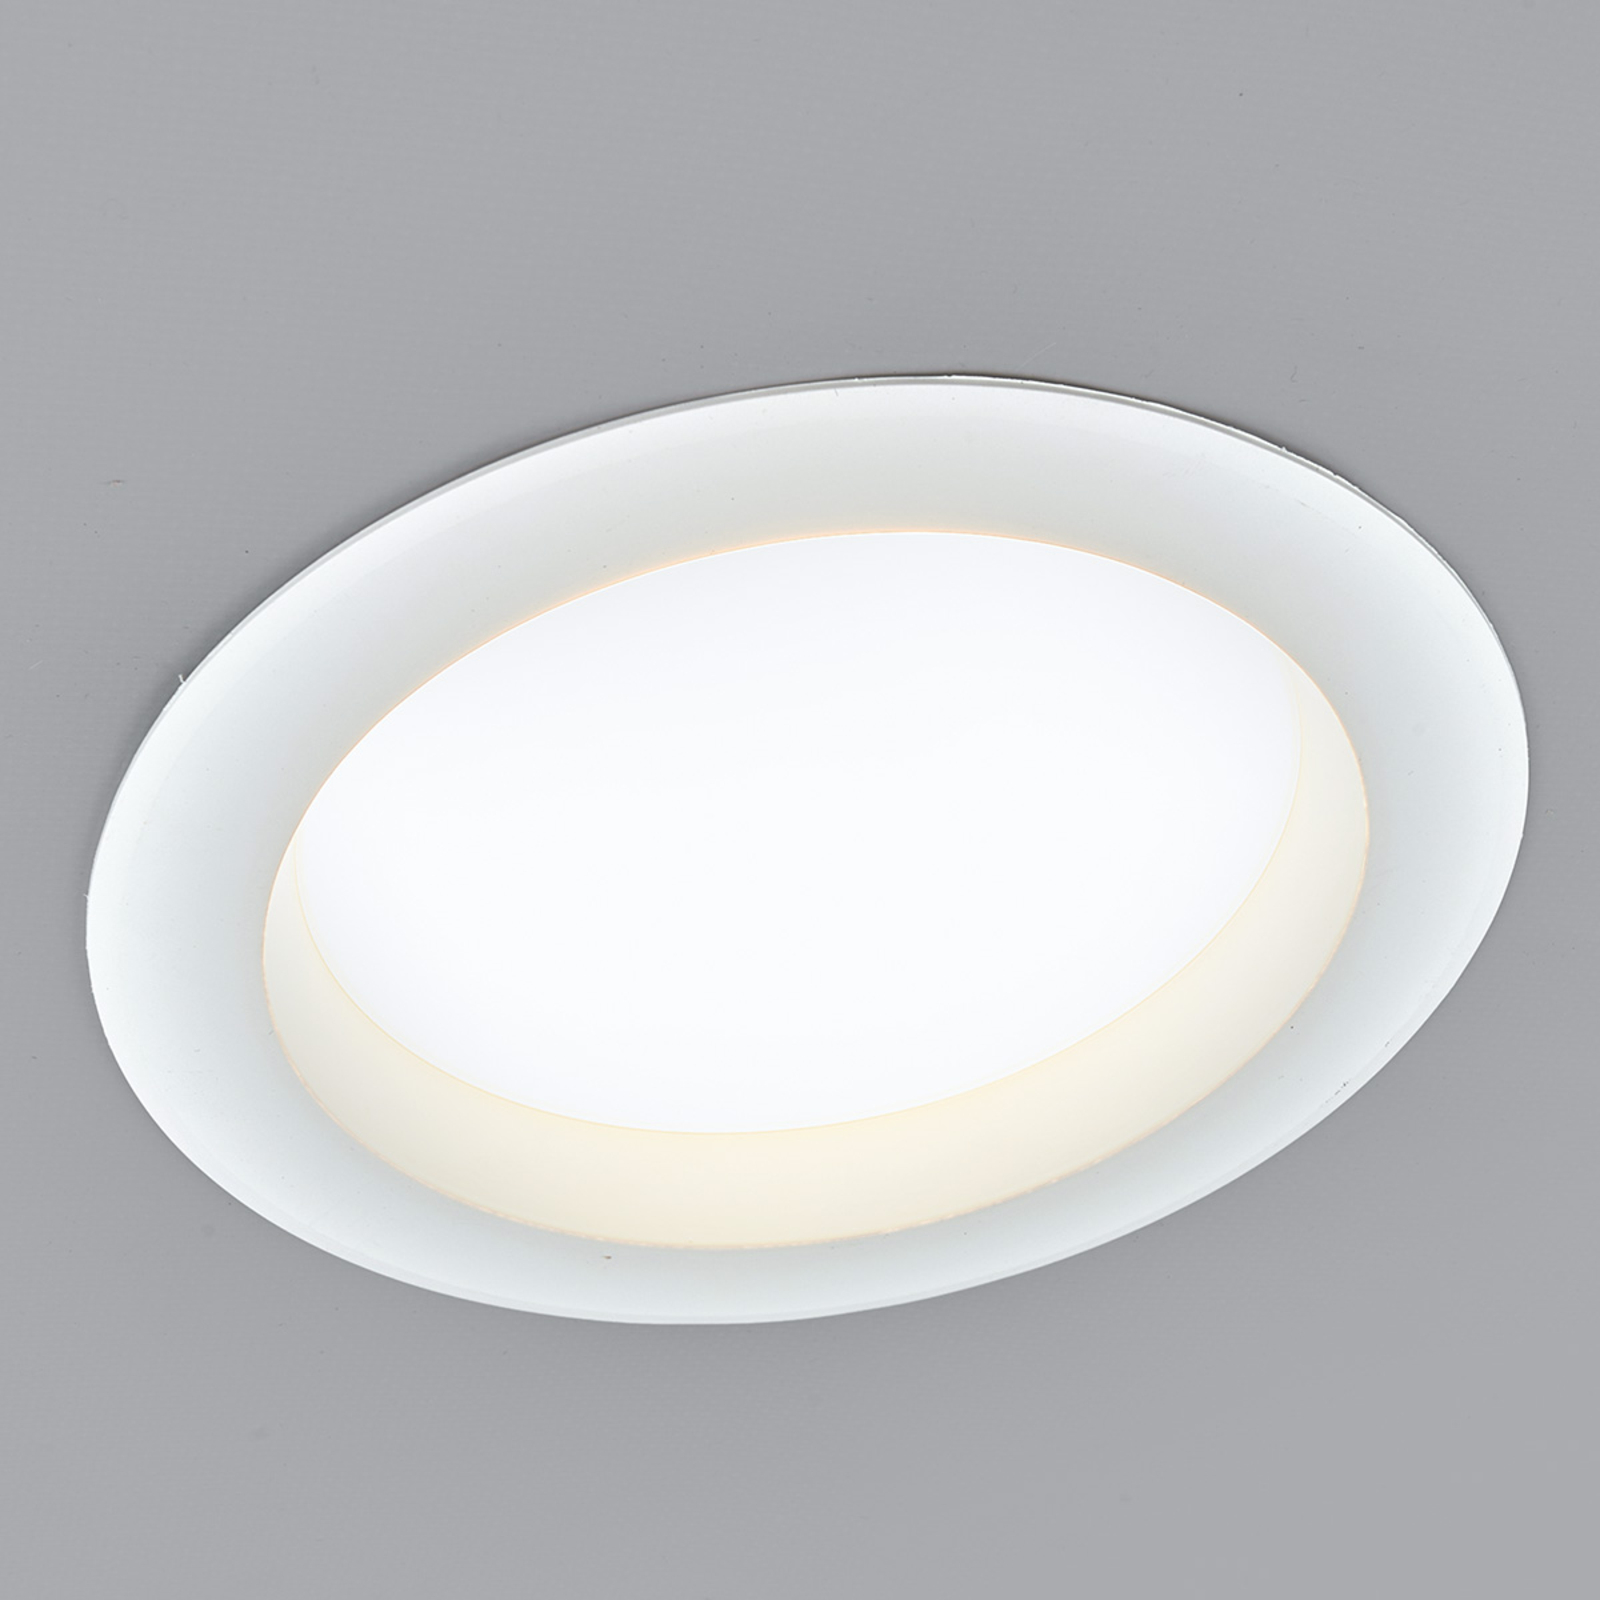 Potente downlight rotondo LED Arian, 17,4 cm 15W